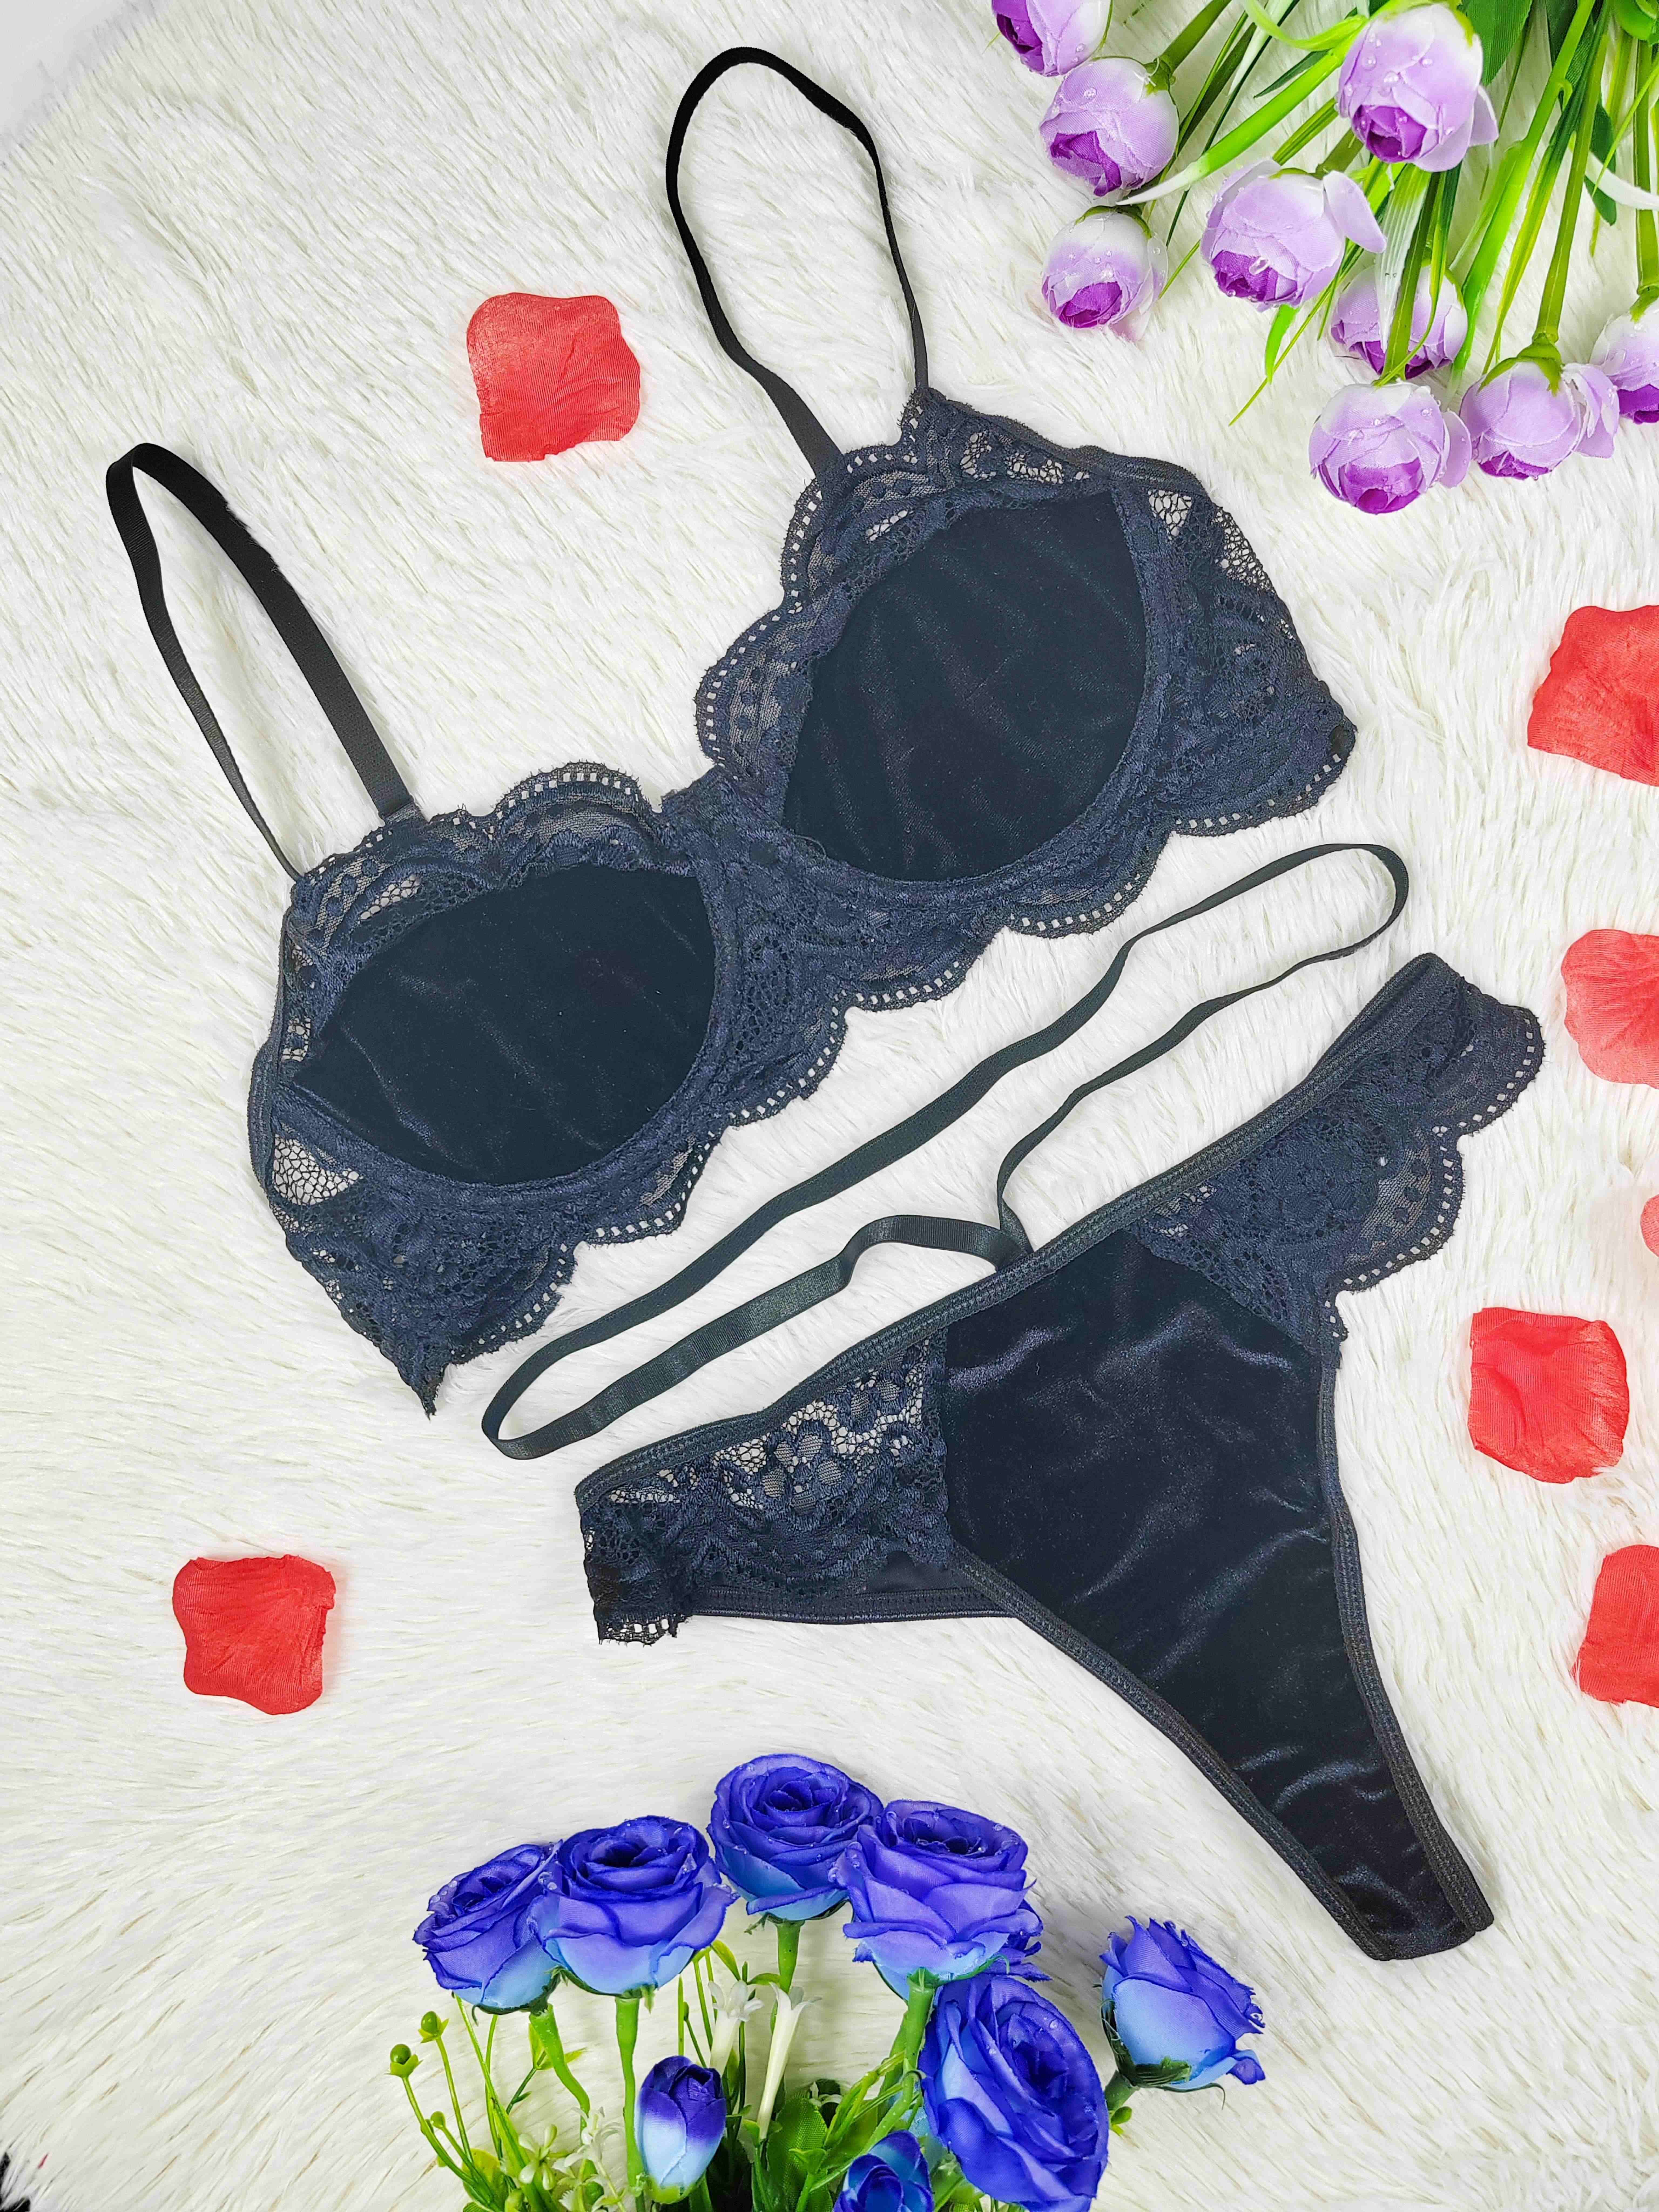 Contrast Lace Lingerie Set, Cut Out Bra & Thong, Women's Sexy